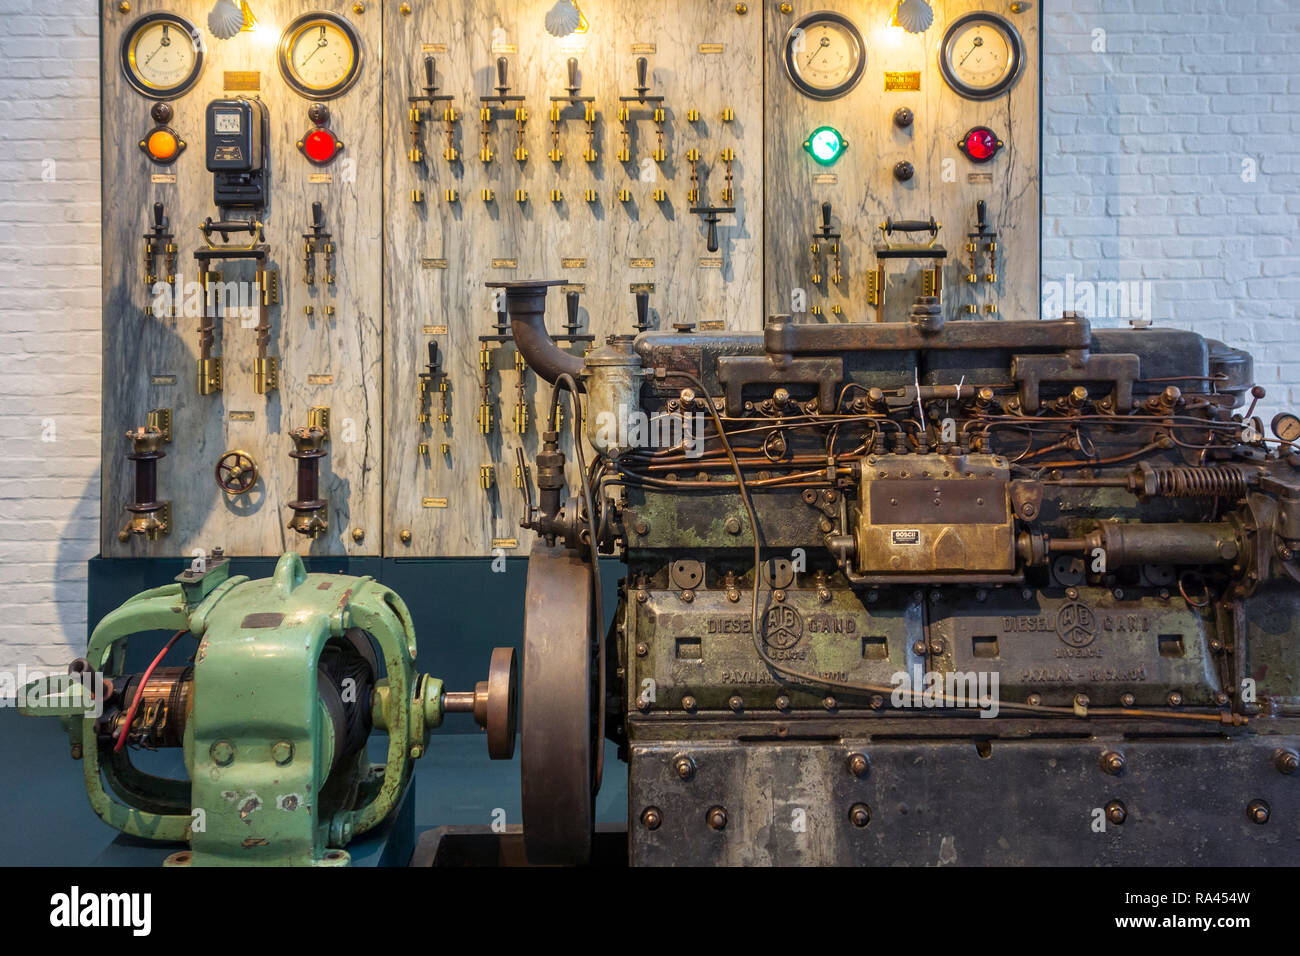 Paxman-Ricardo belga Anglo Corporation / ABC motore diesel generatore a MIAT / Industriemuseum, archeologia industriale museo, Gand, Belgio Foto Stock